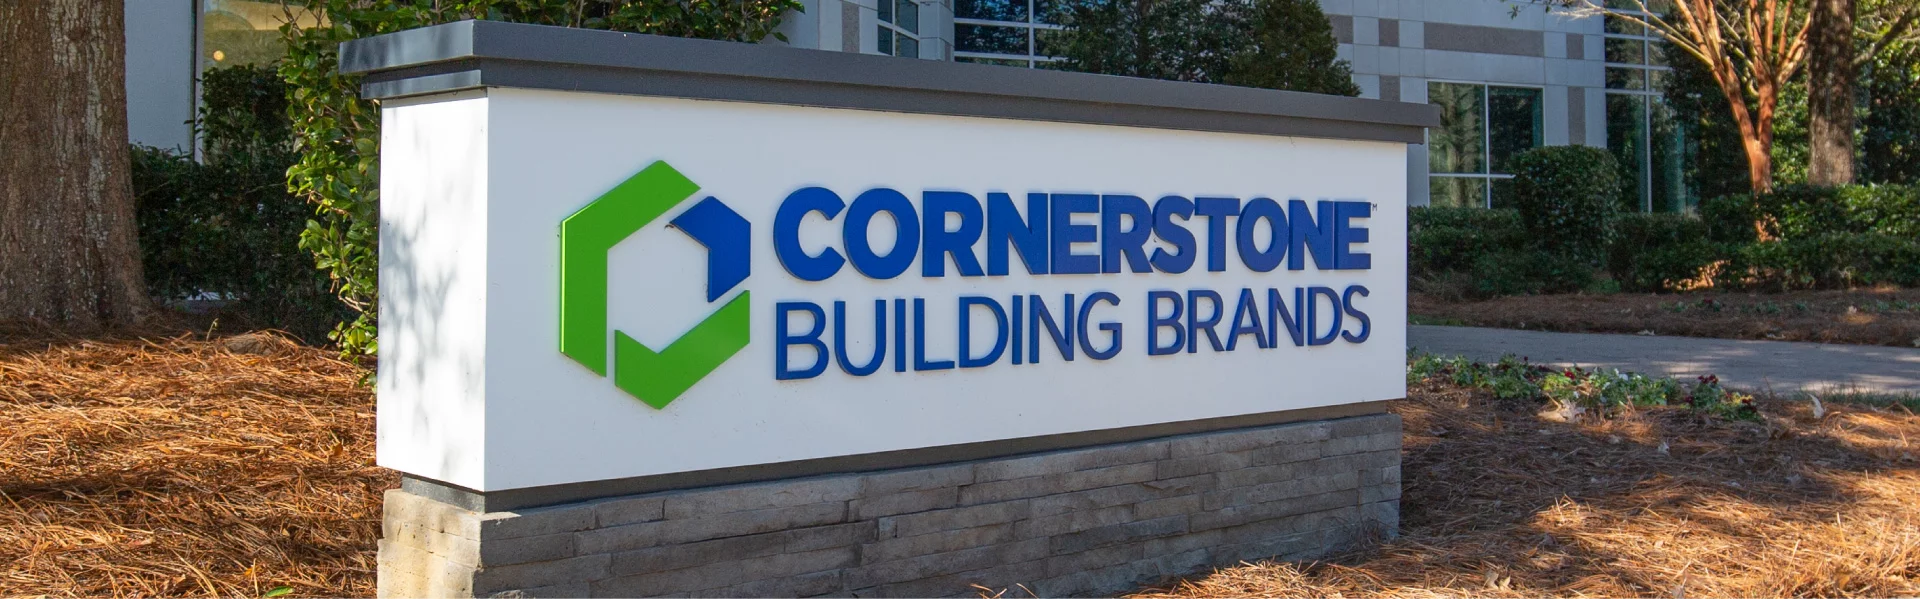 Cornerstone Building Brands sign